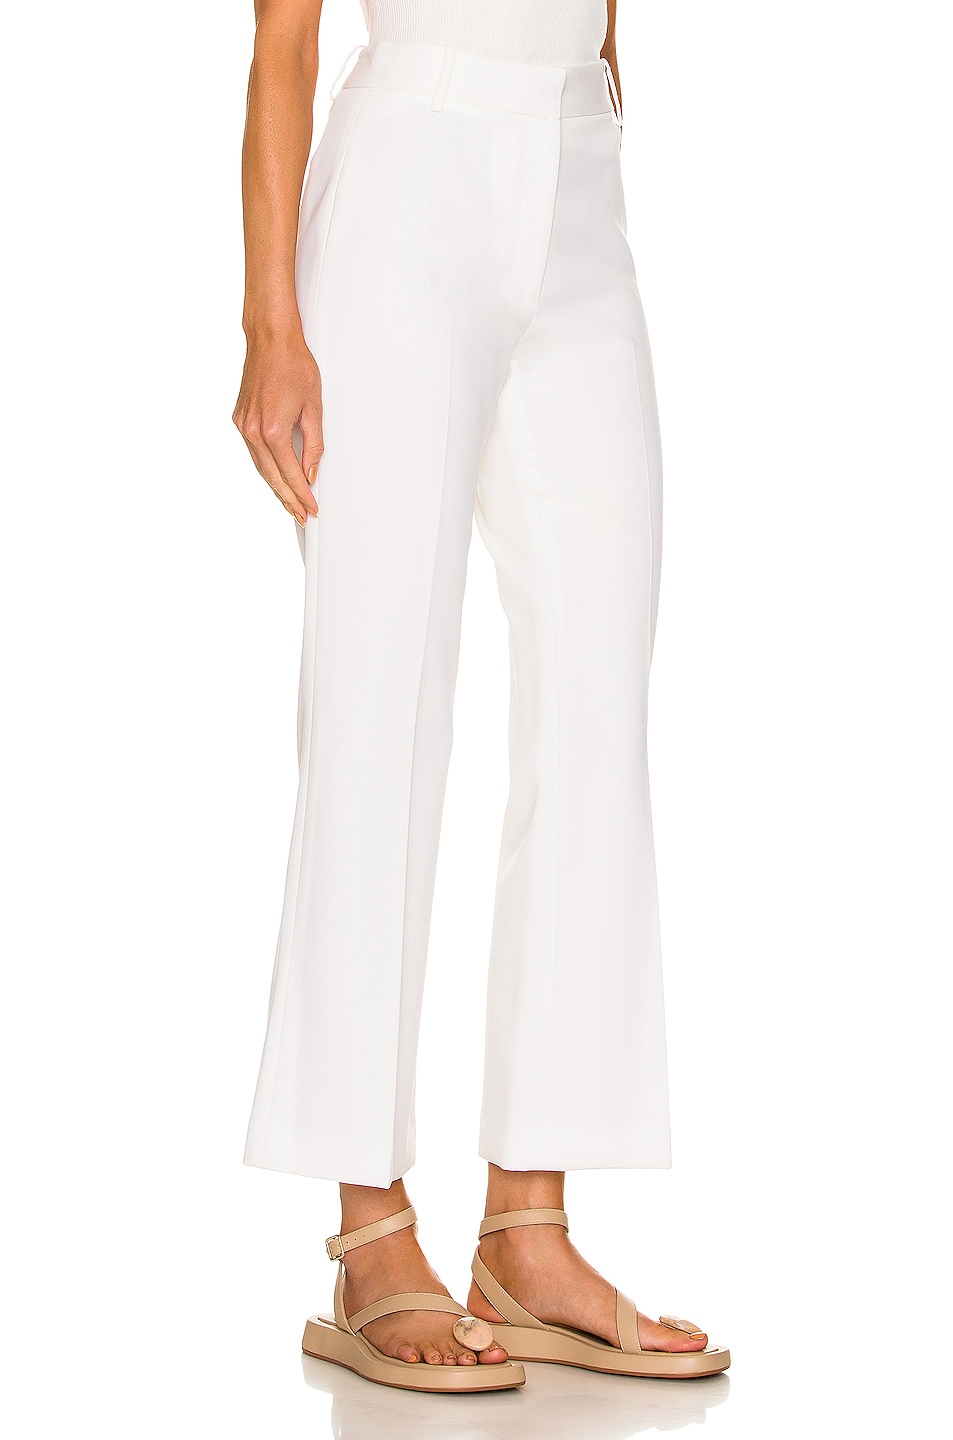 NILI LOTAN Cropped Corette Pant in White | FWRD